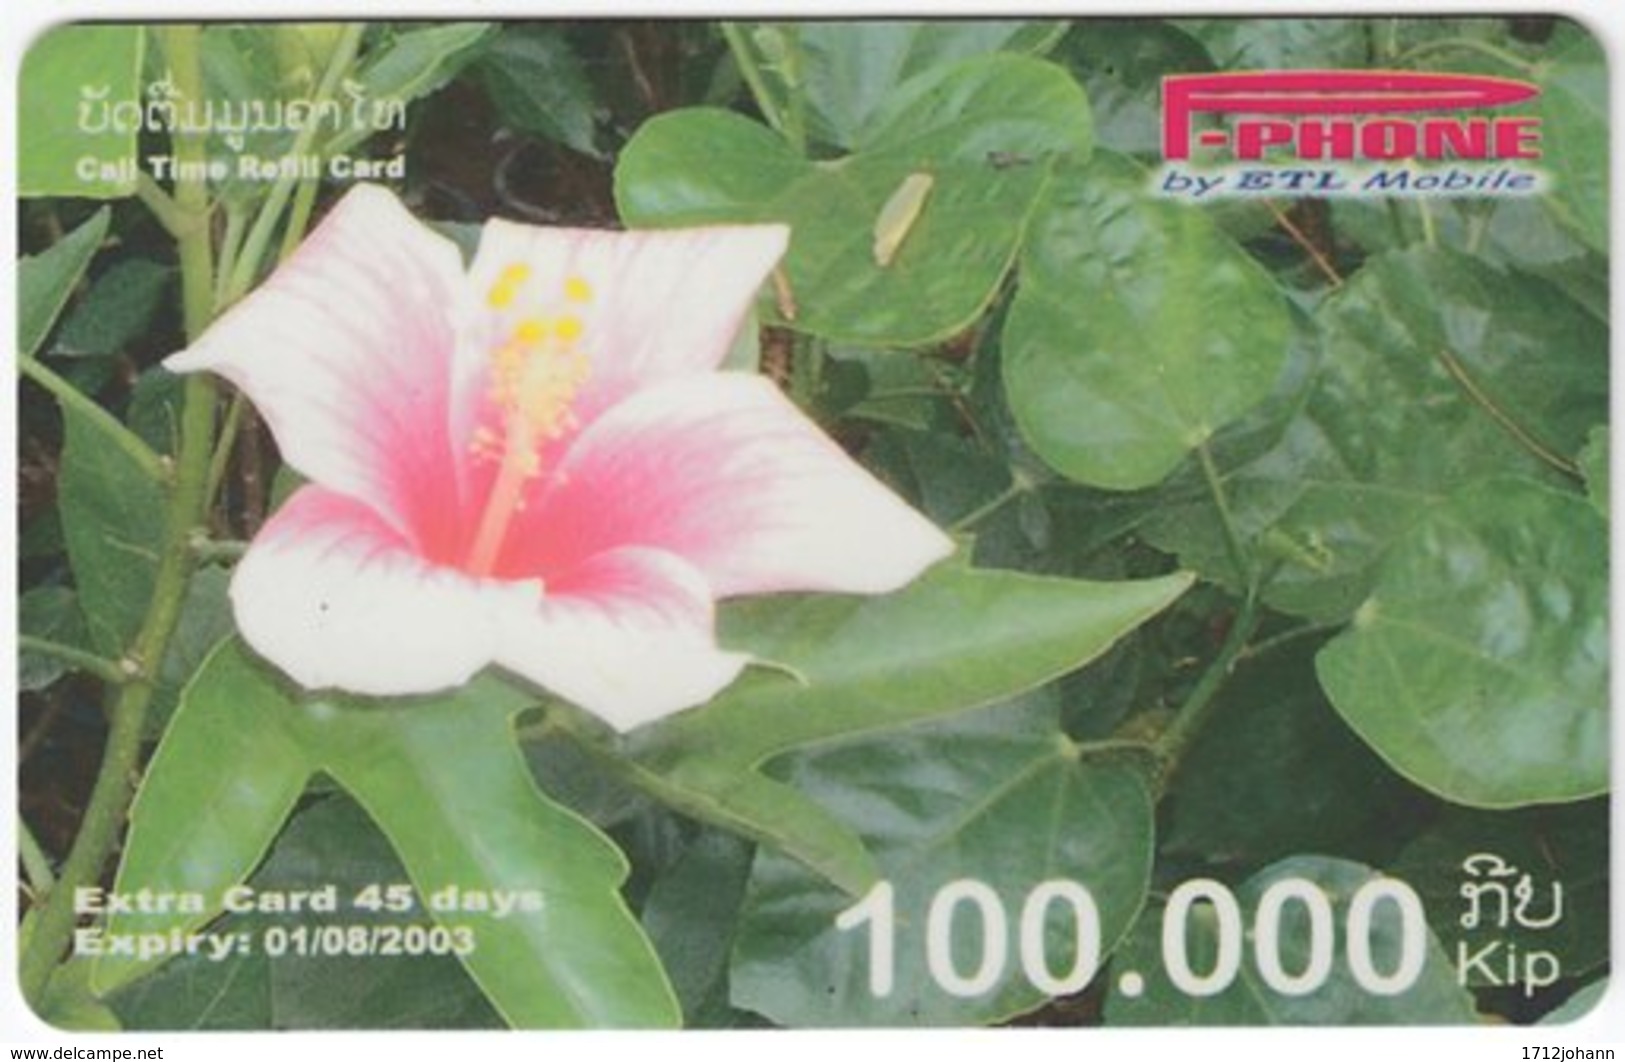 LAOS A-119 Prepaid P-Phone - Plant, Flower - Used - Laos